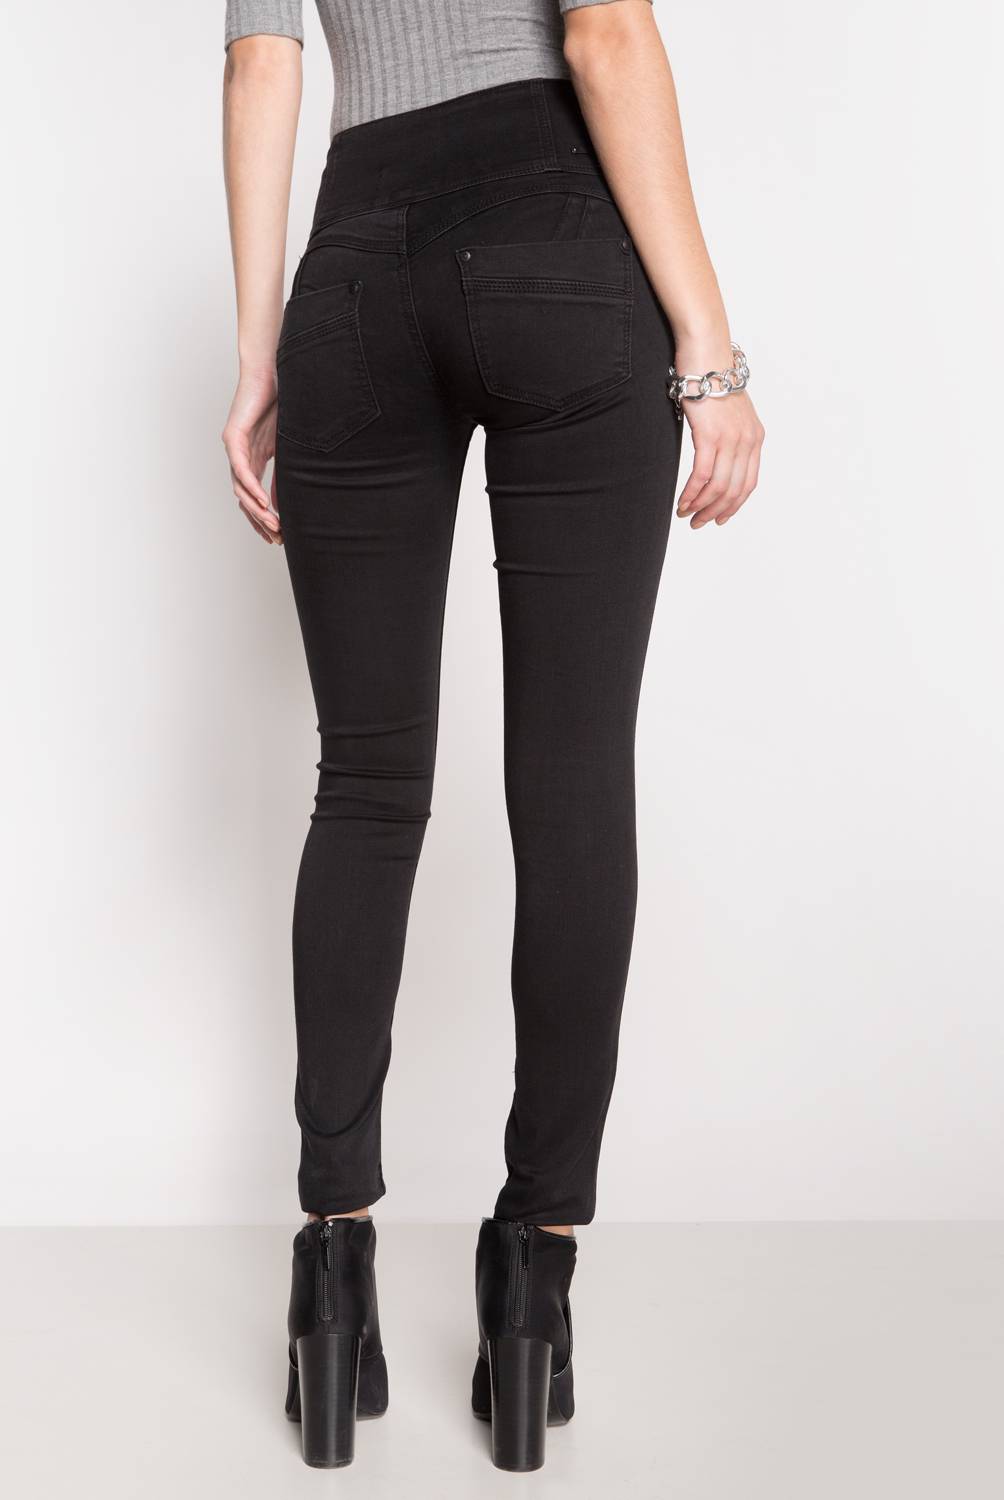 MOSSIMO - Jeans Skinny Tiro  Alto Mujer